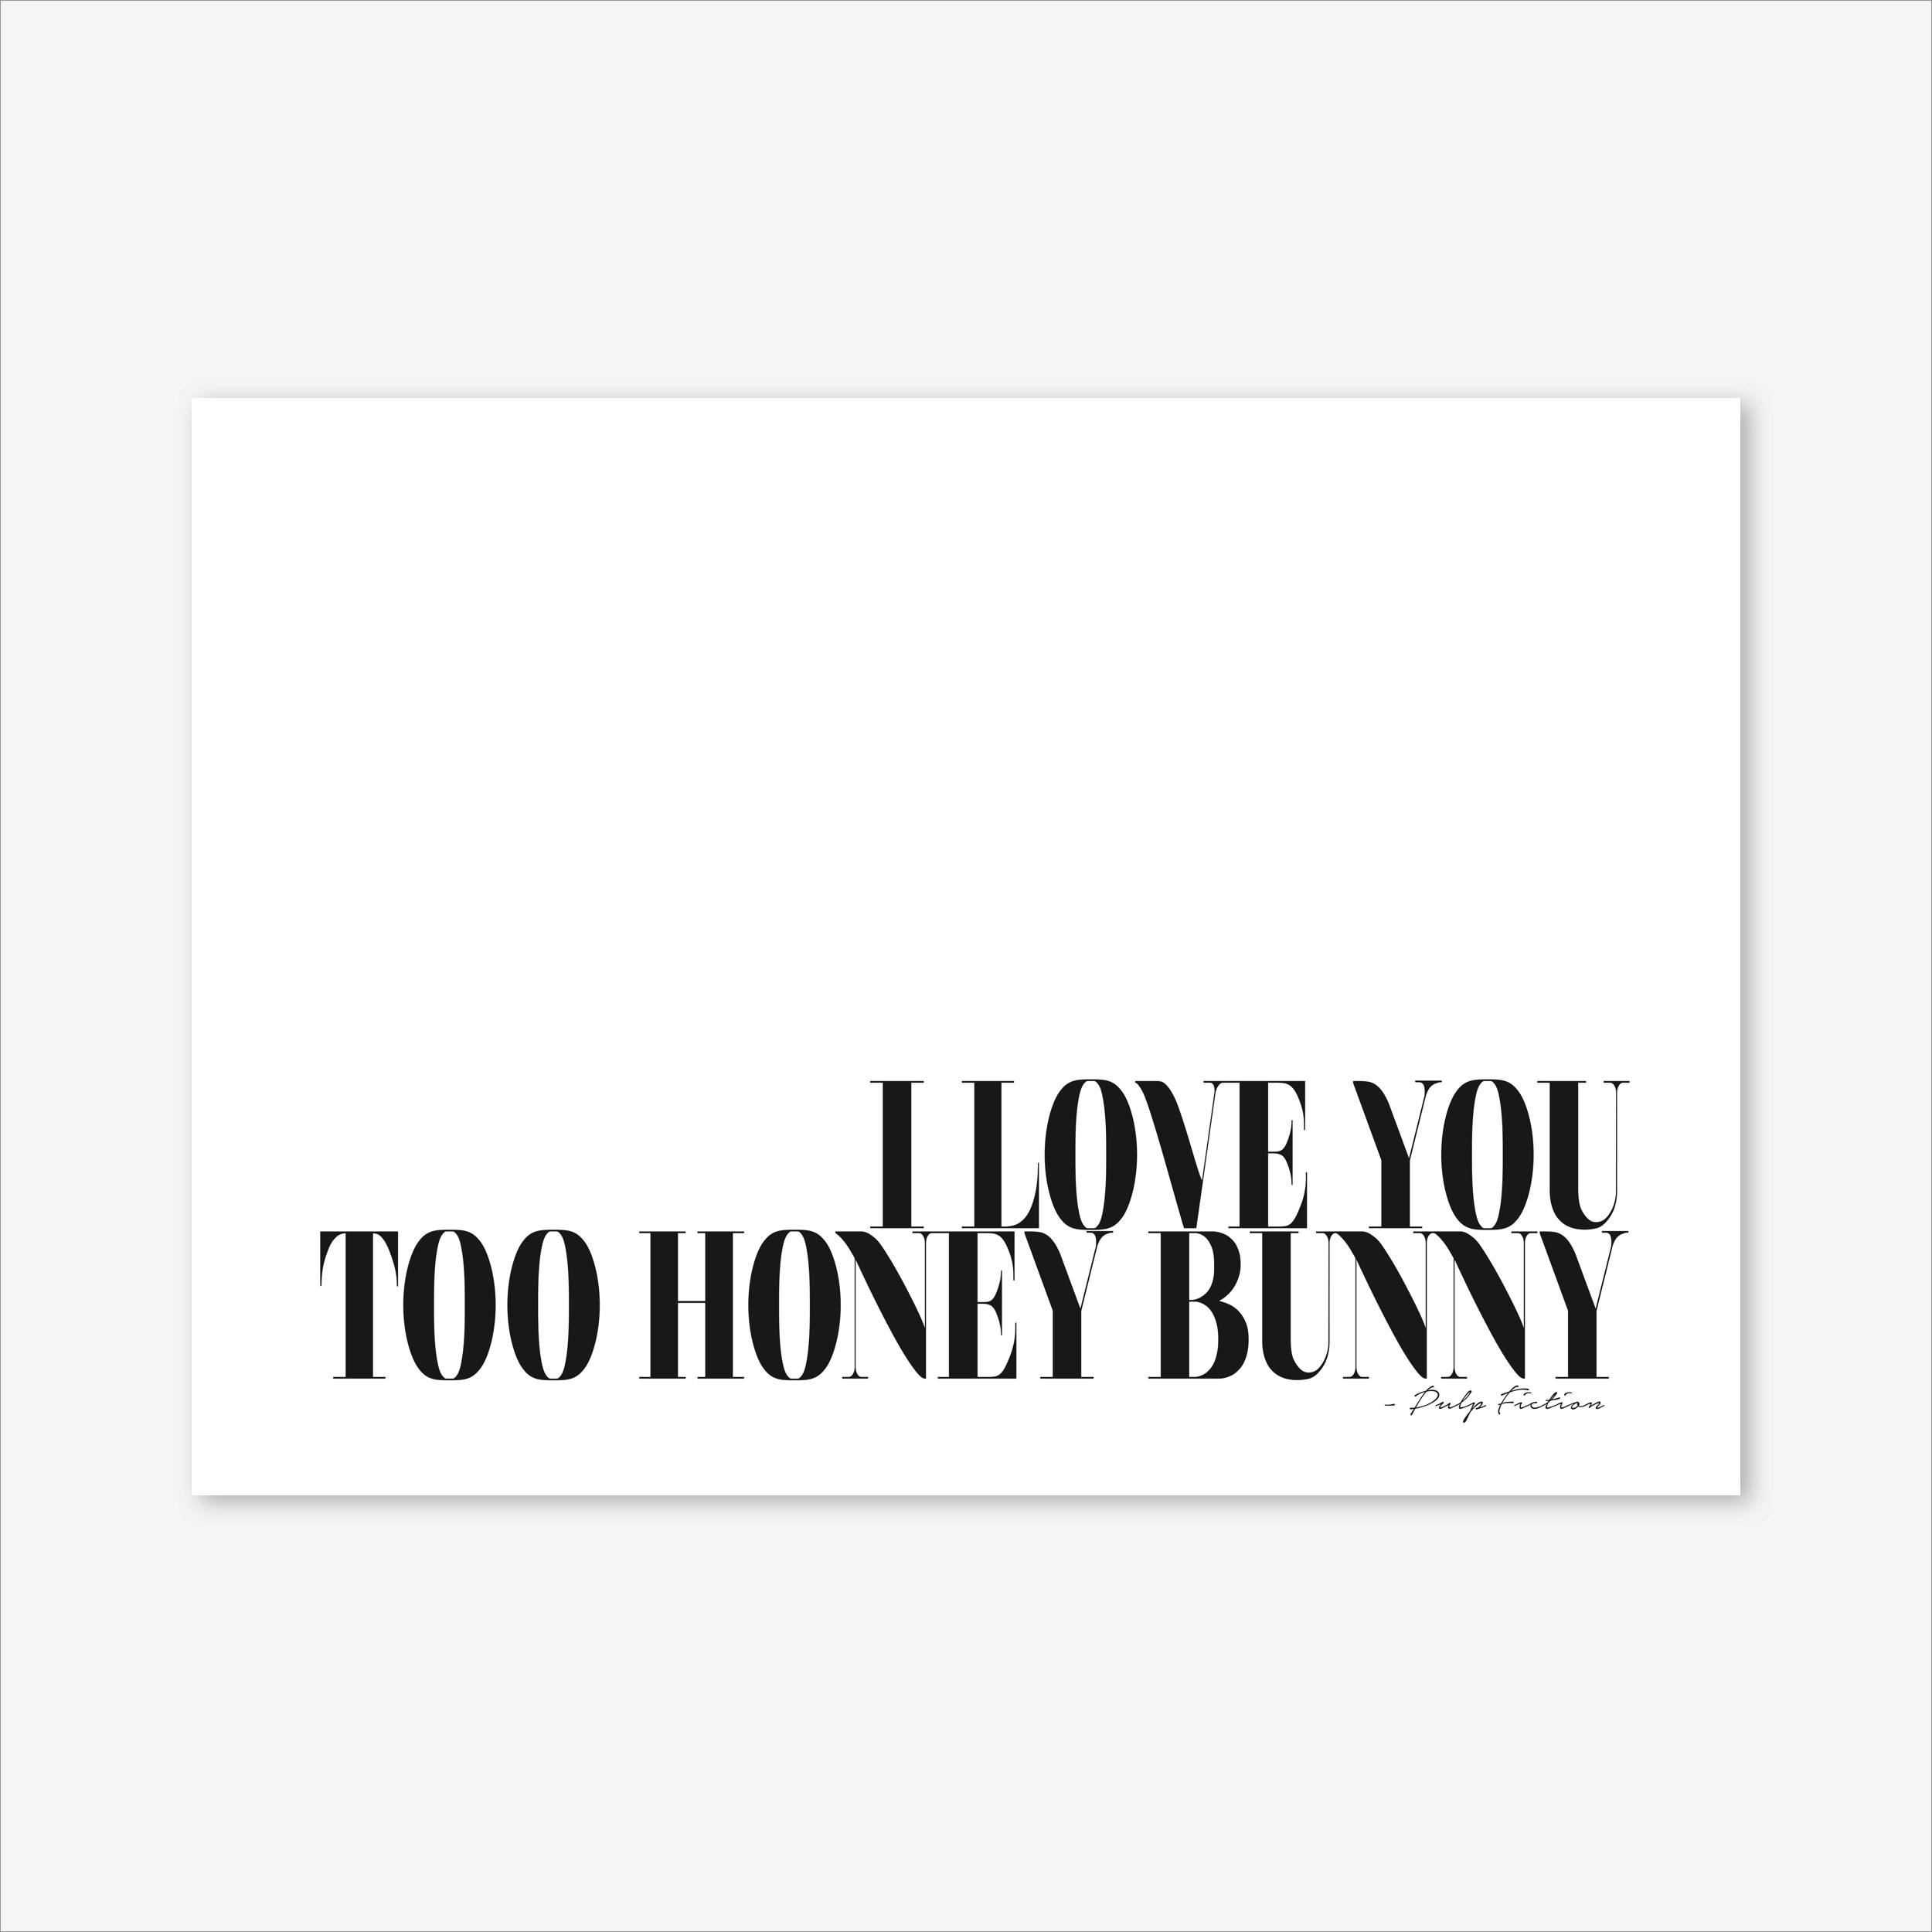 Love you honey bunny card